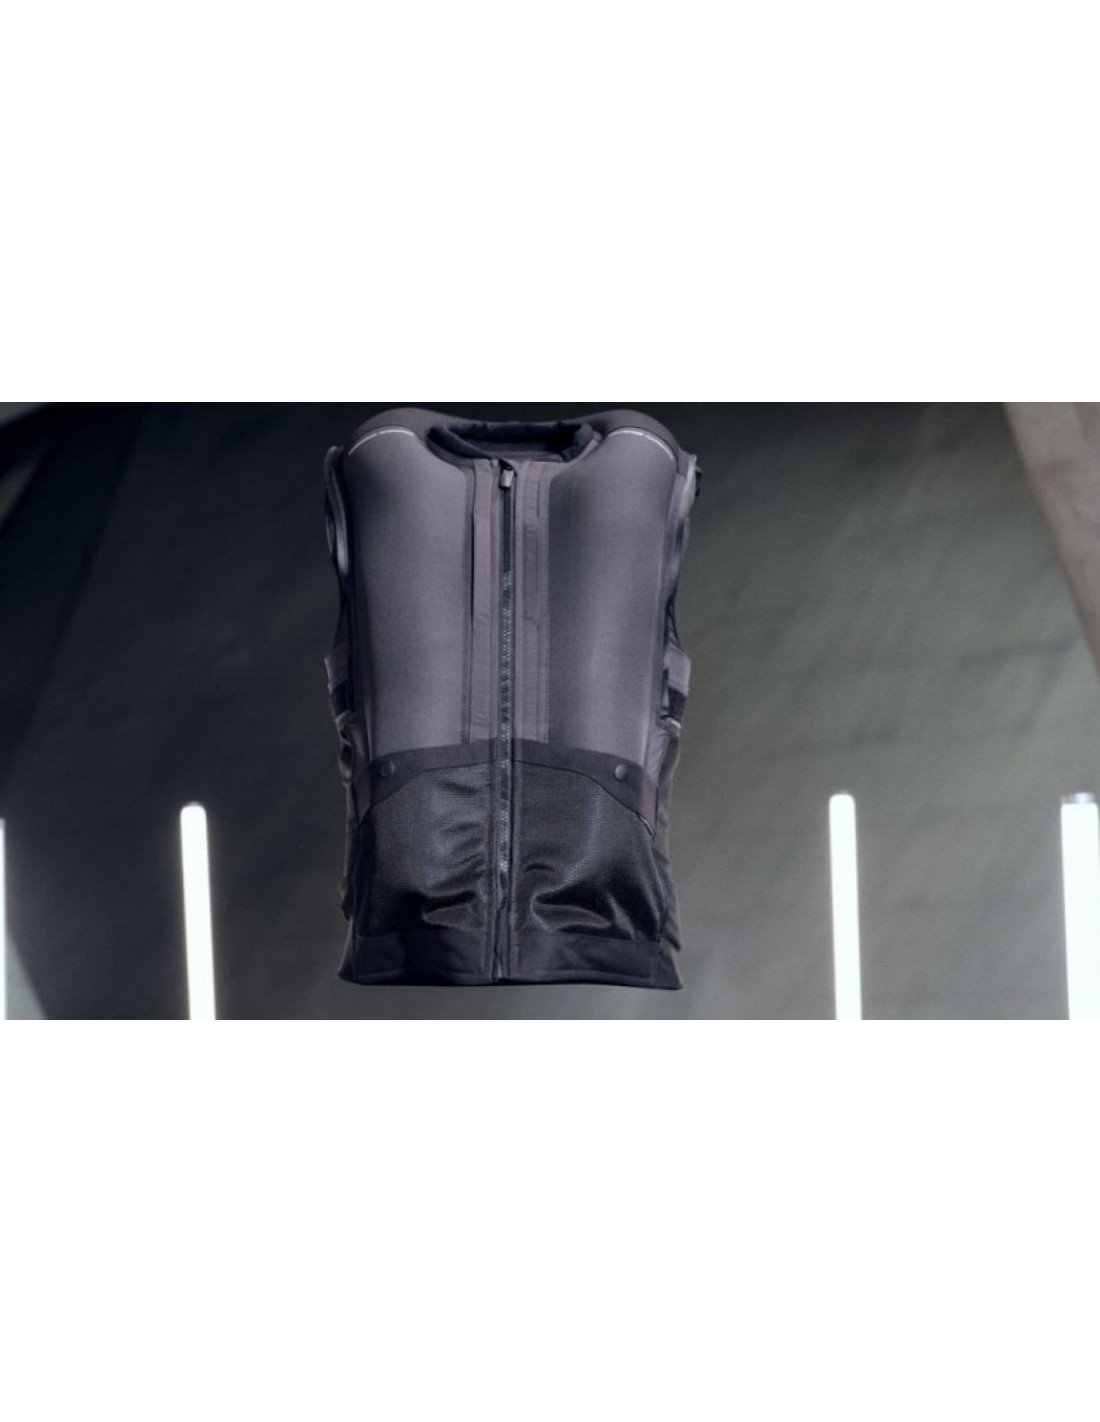 Gilet Airbag TUCANO URBANO Airscud misura: M nero Poliestere